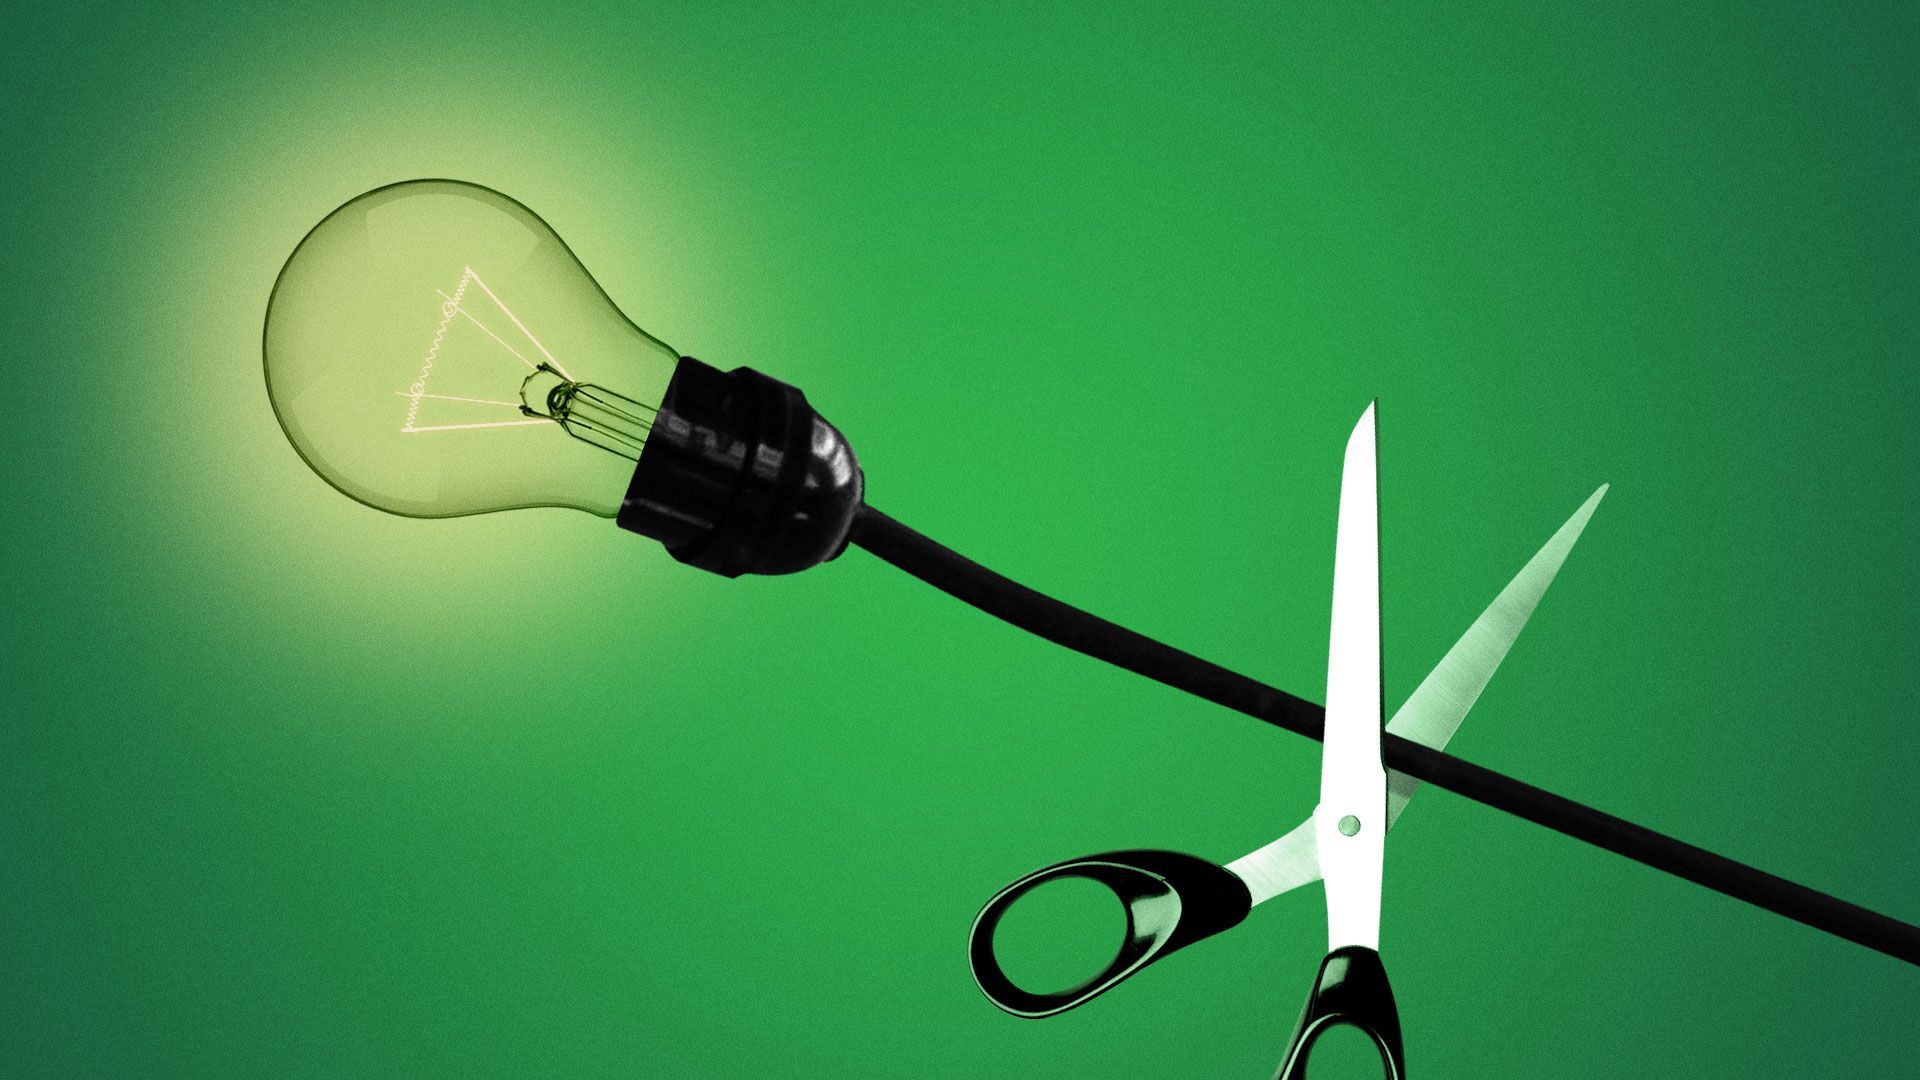 Illustration of scissors cutting a light bulb wire